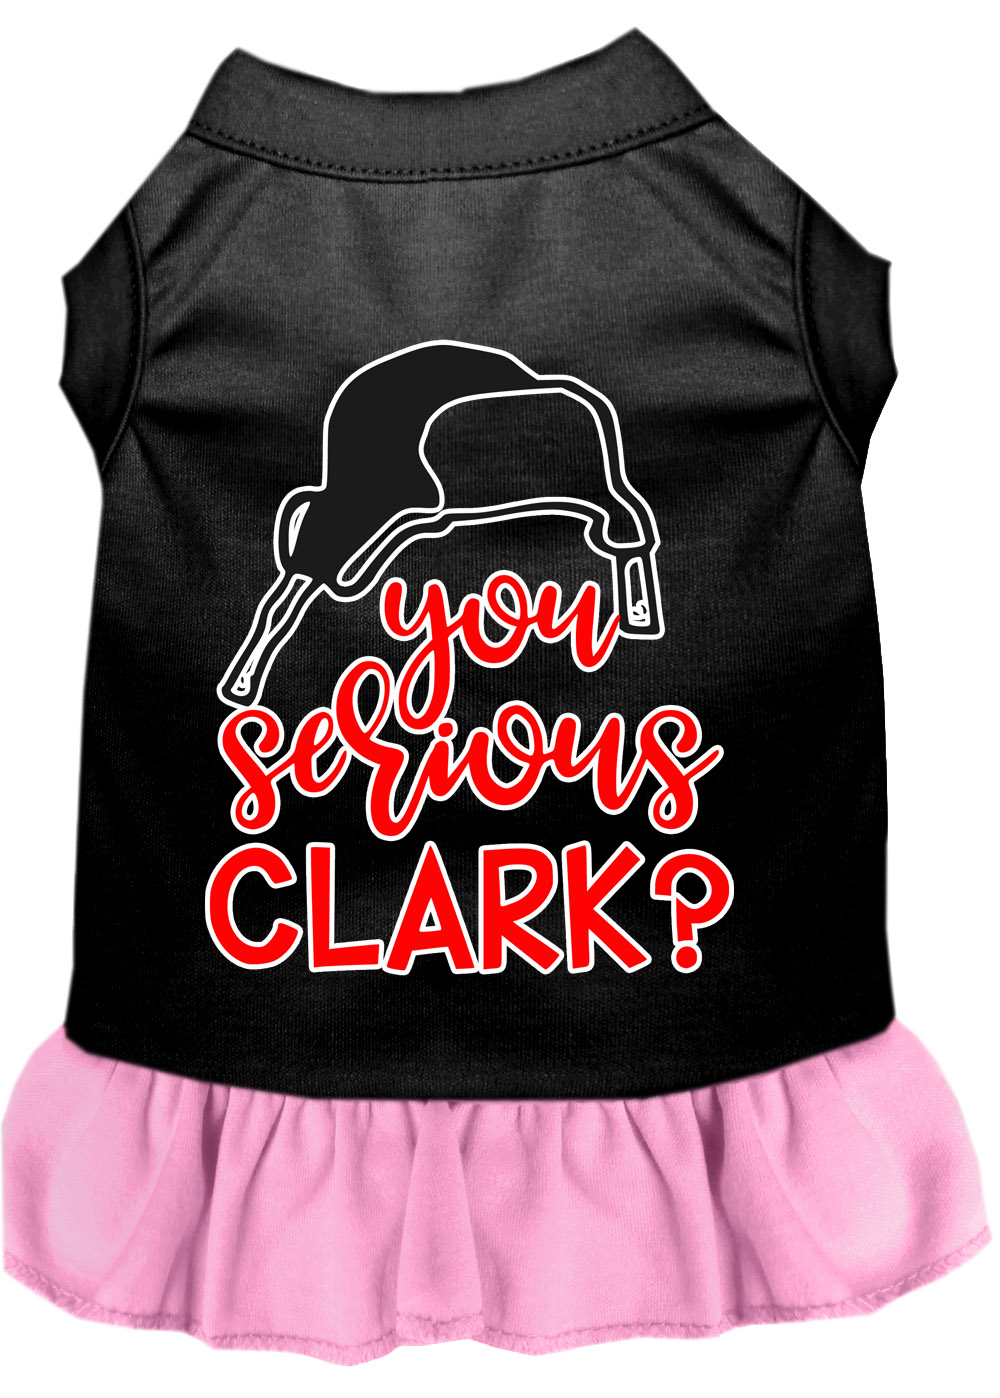 You Serious Clark? Screen Print Dog Dress Black with Light Pink XL